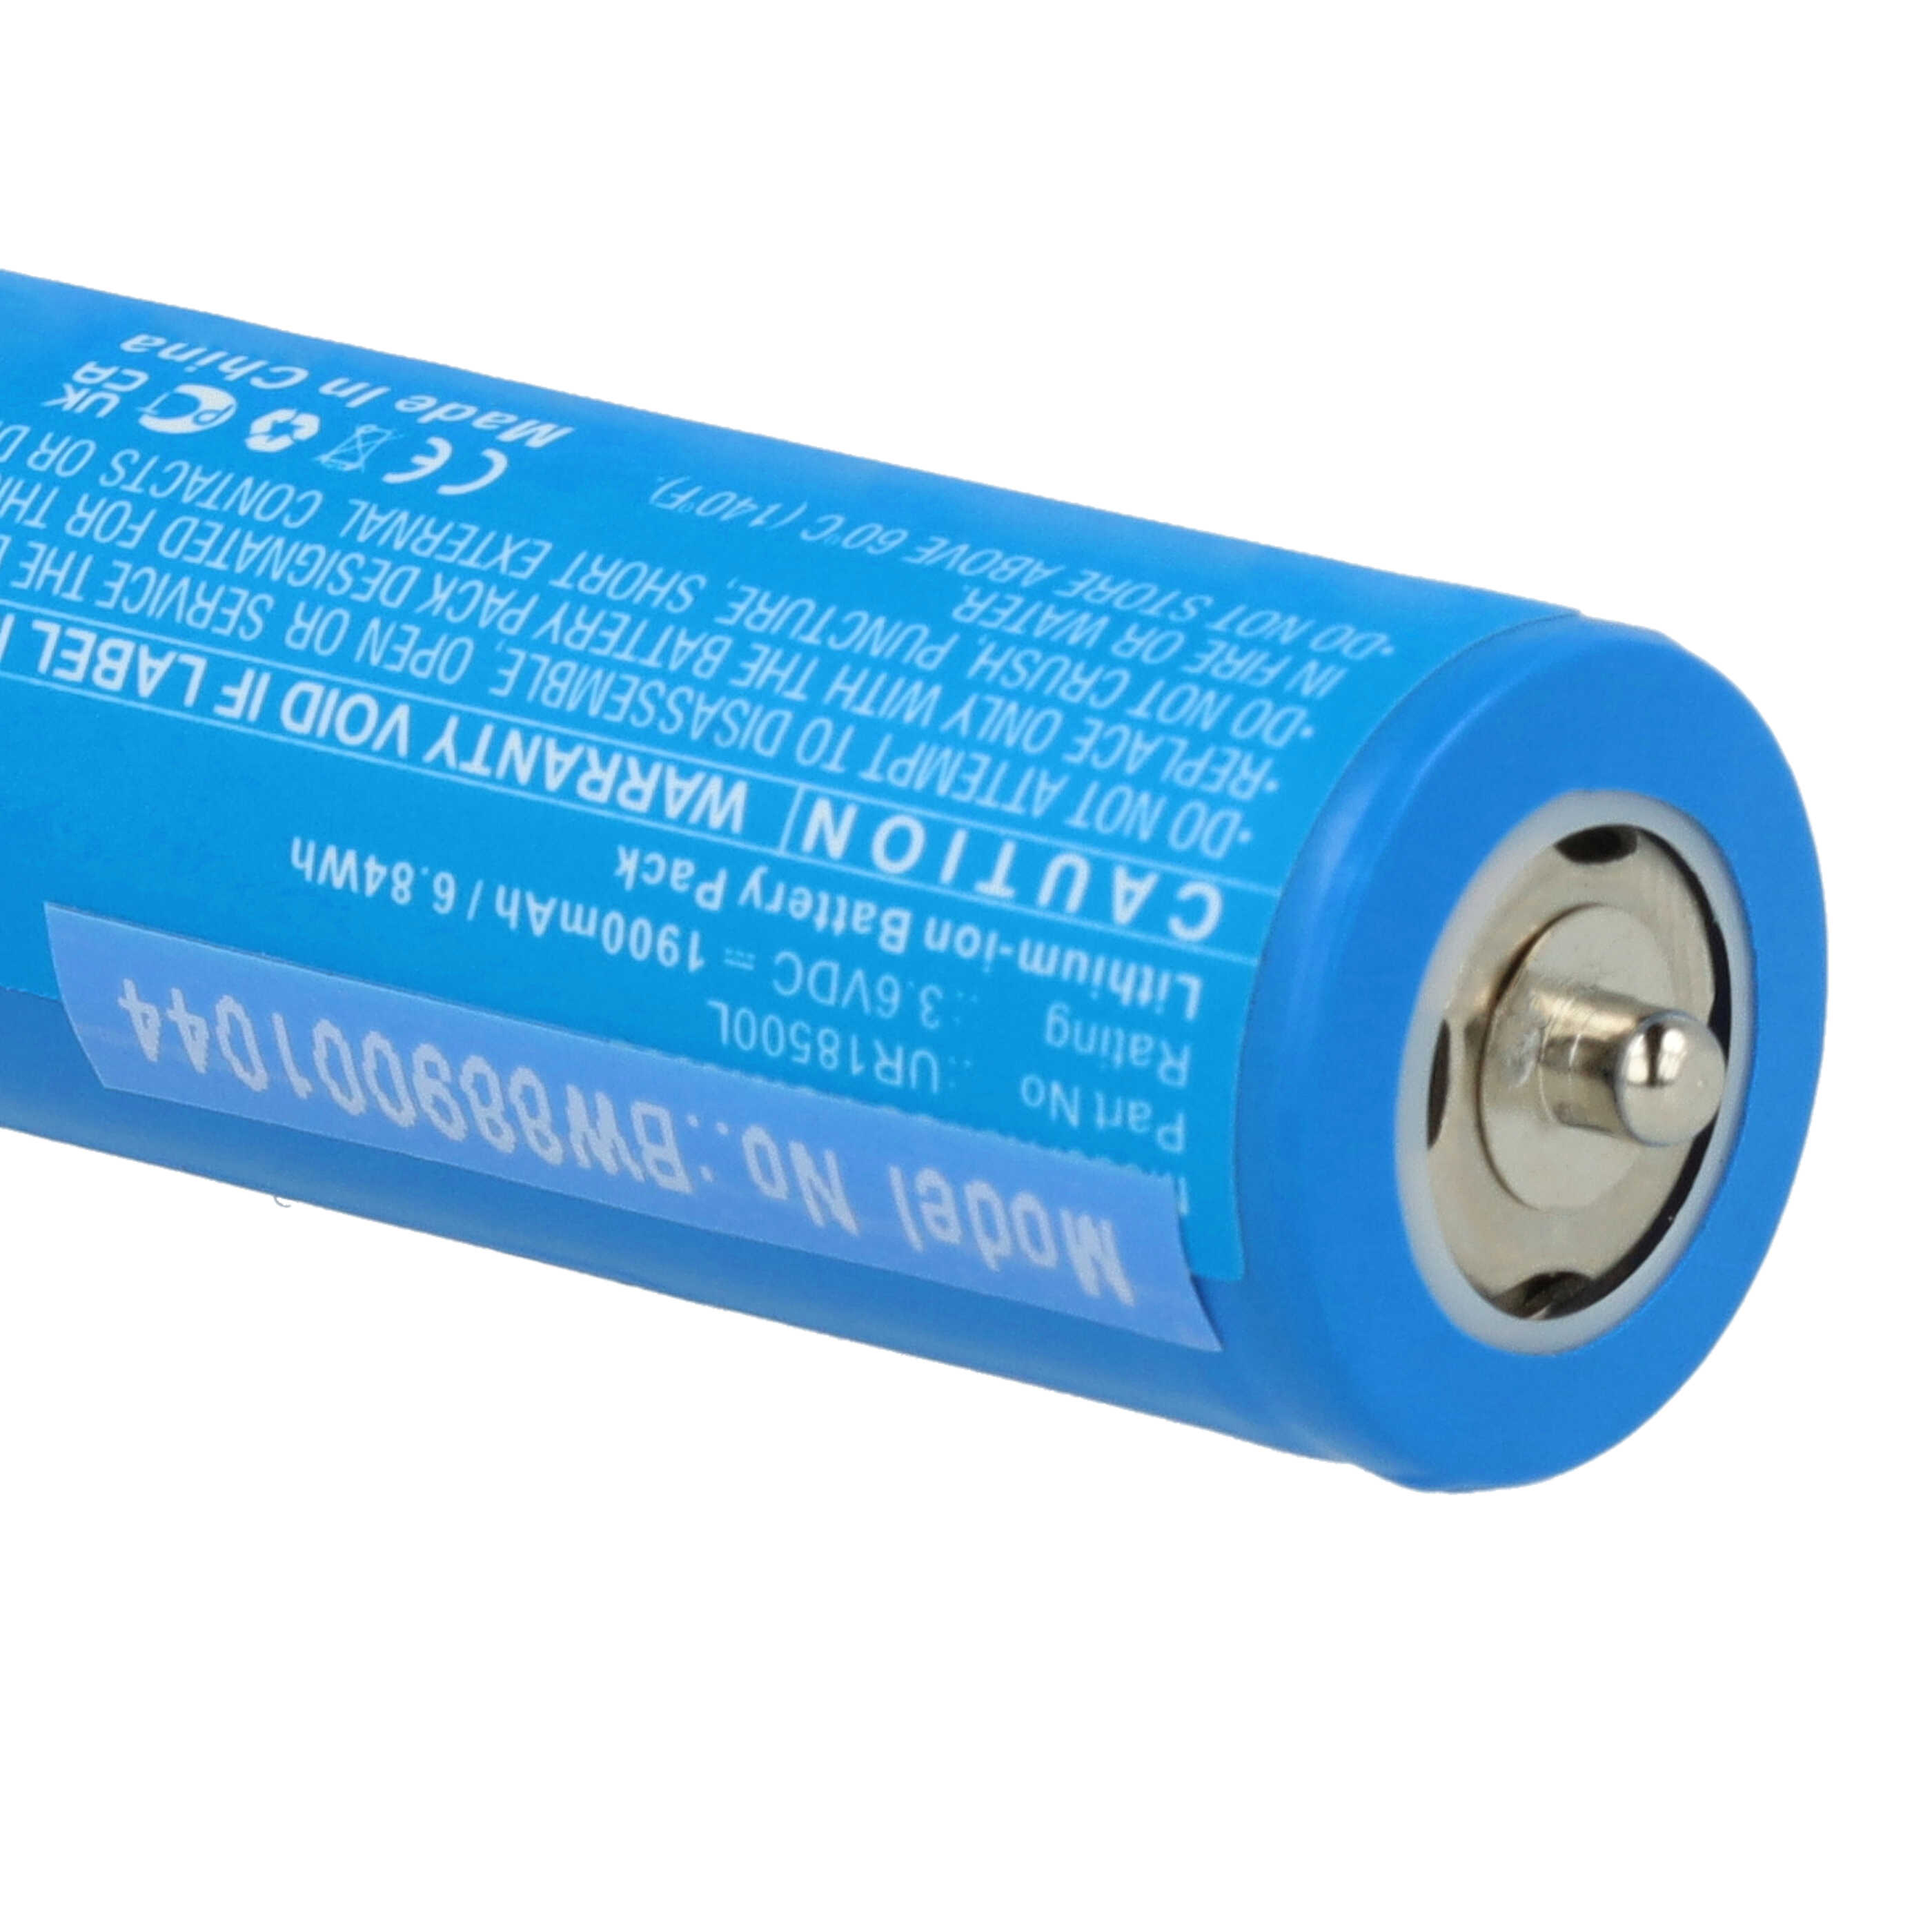 Electric Razor Battery Replacement for Braun 67030924, 3018765, 67030925, 67030625 - 1900mAh 3.6V Li-Ion